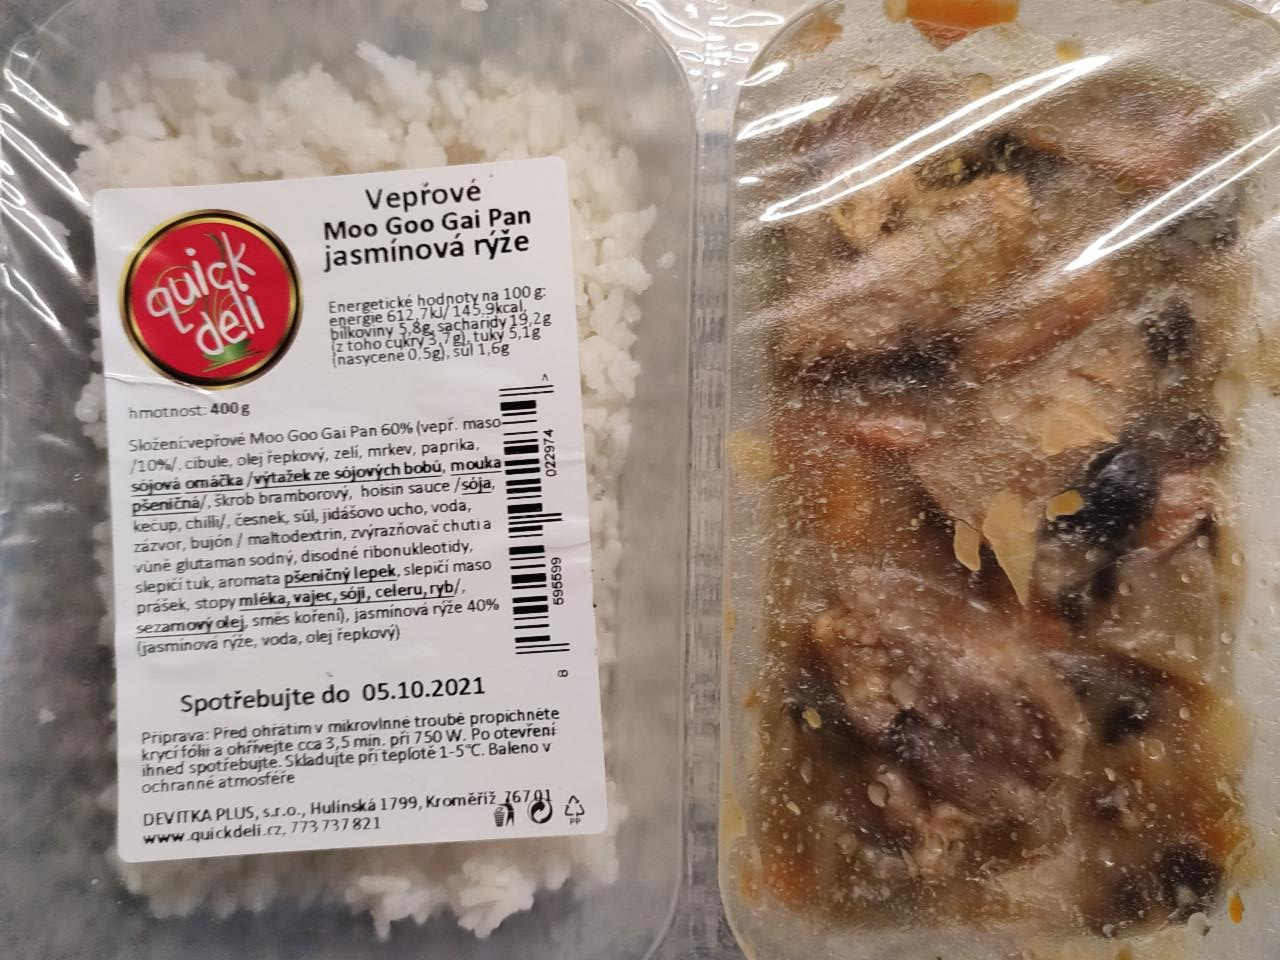 Fotografie - Vepřové Moo Goo Gain Pan jasmínová rýže